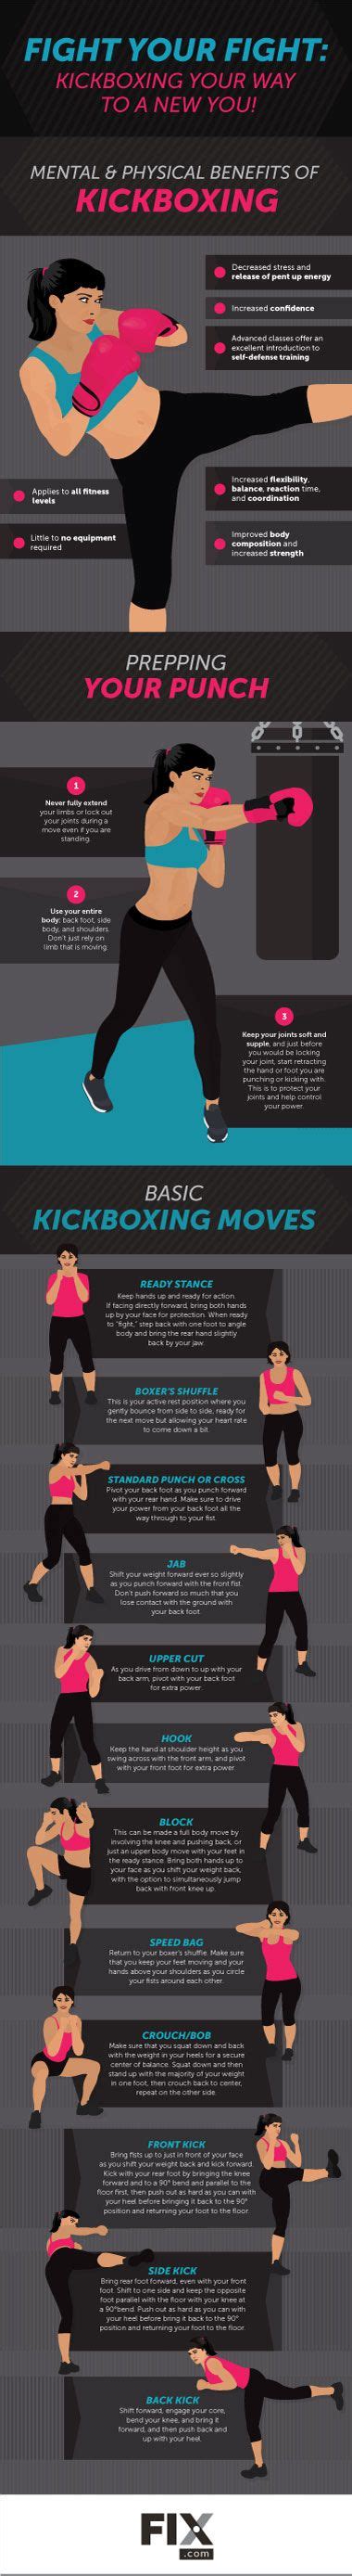 The Benefits Of Kickboxing Kickboxing Workout Kickboxing Benefits